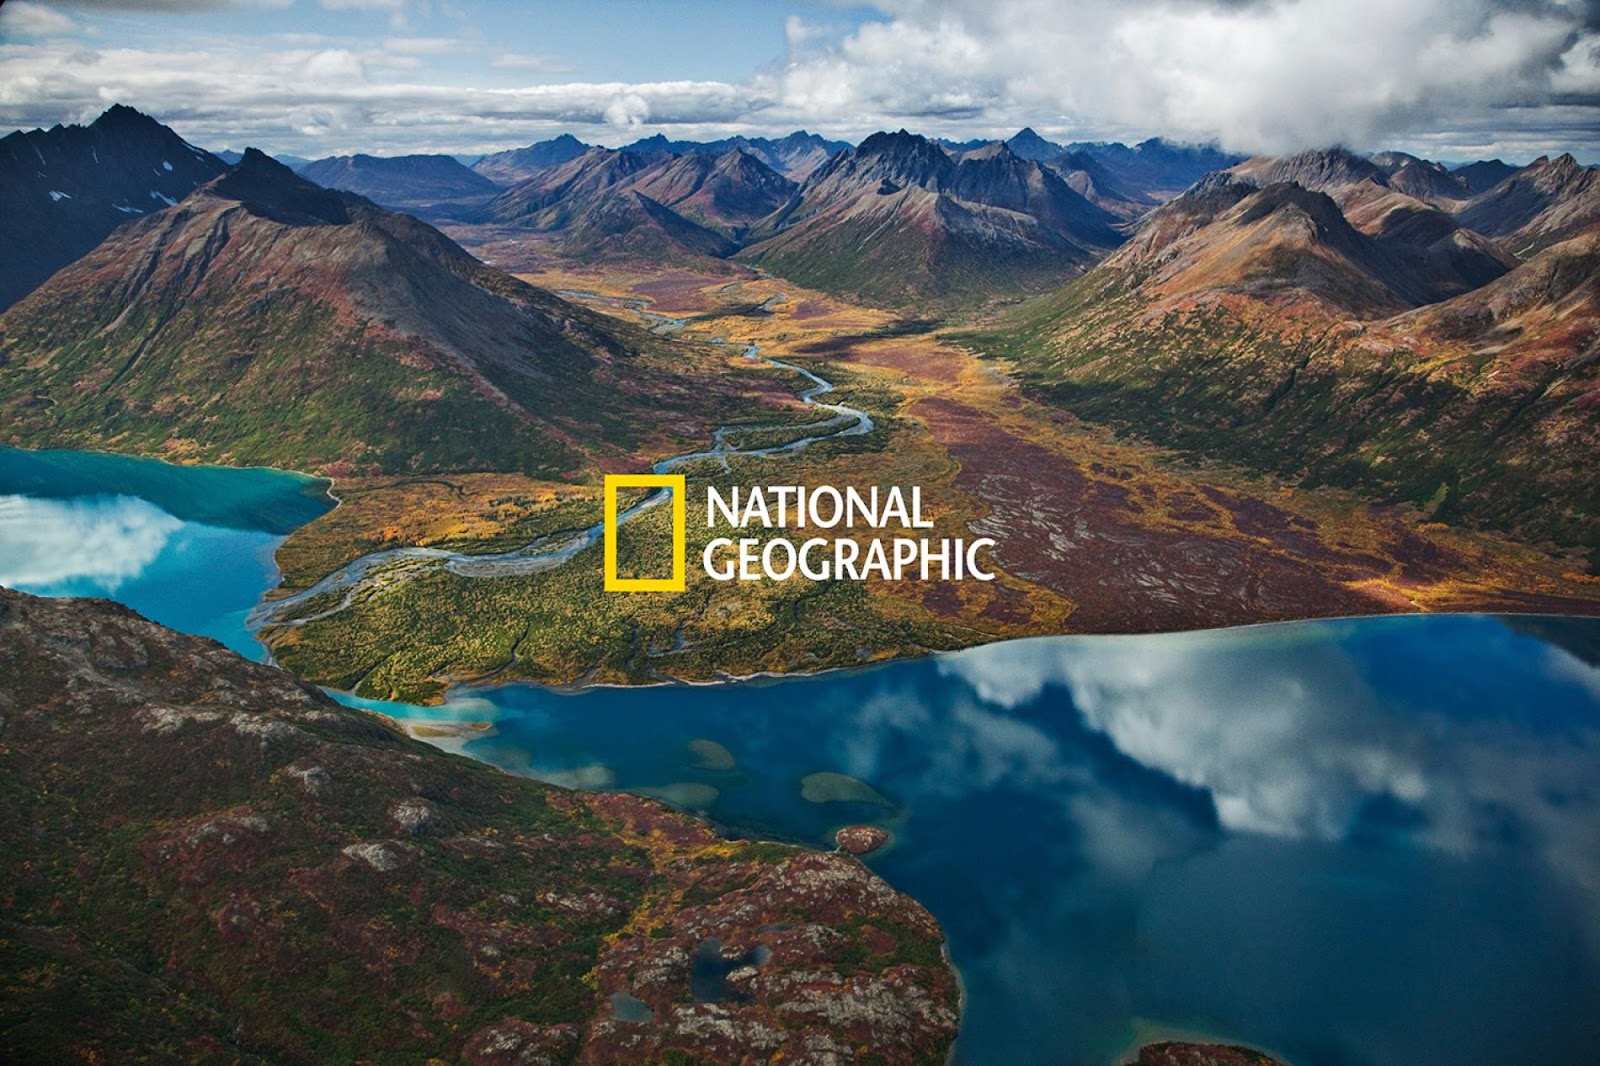 Via National Geographic